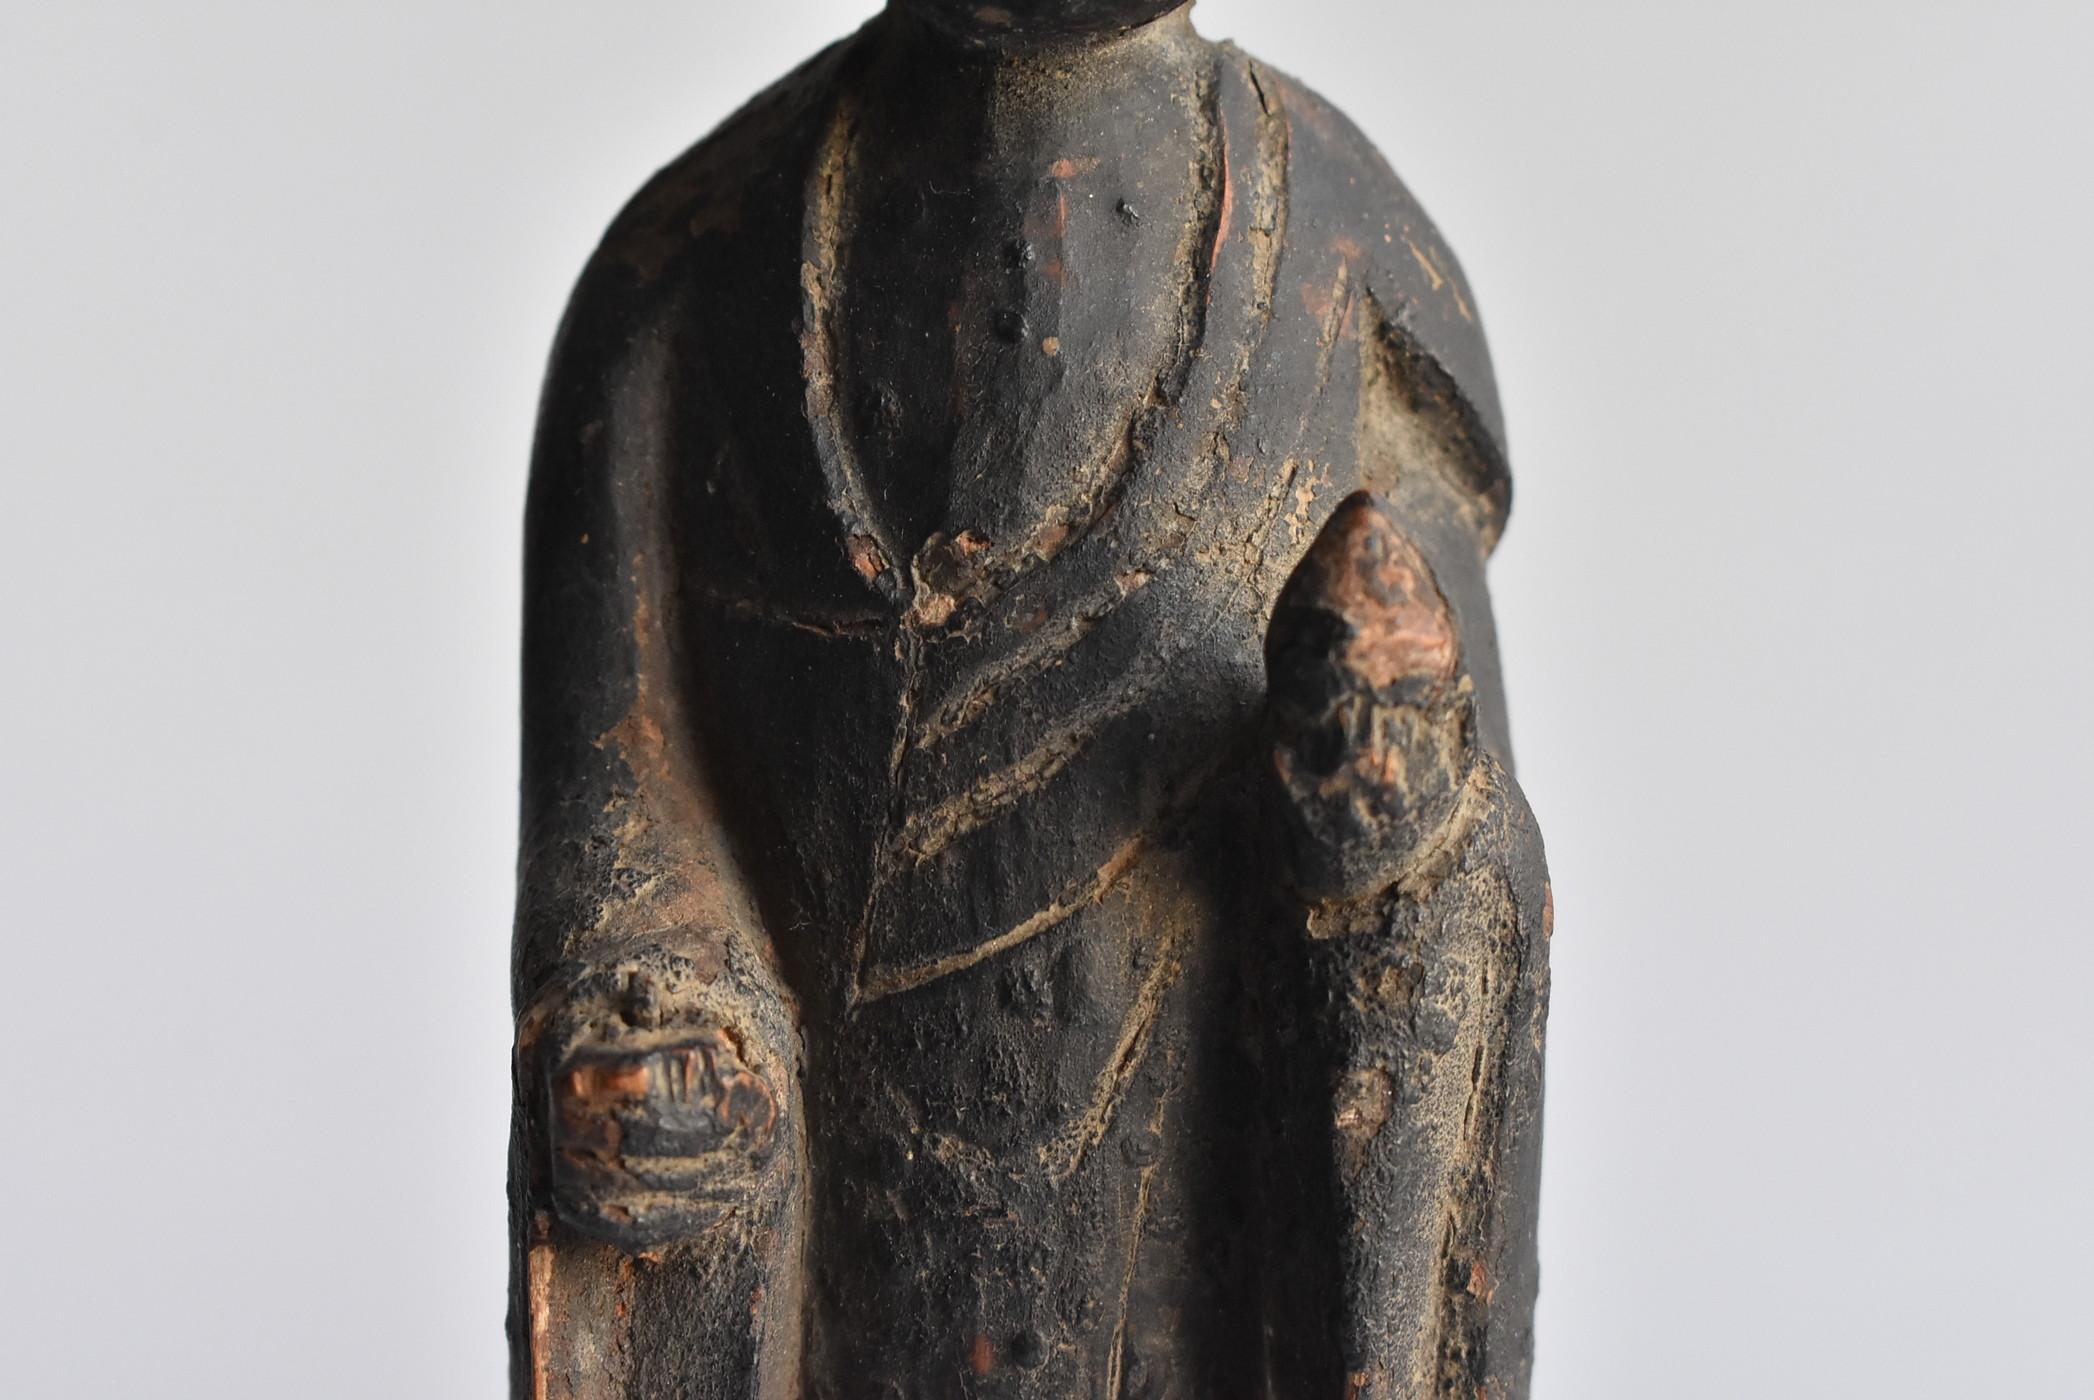 Japane Wood Carving Jizo Bodhisattva Statue /Buddha Statue, circa 1400s-1600s 1